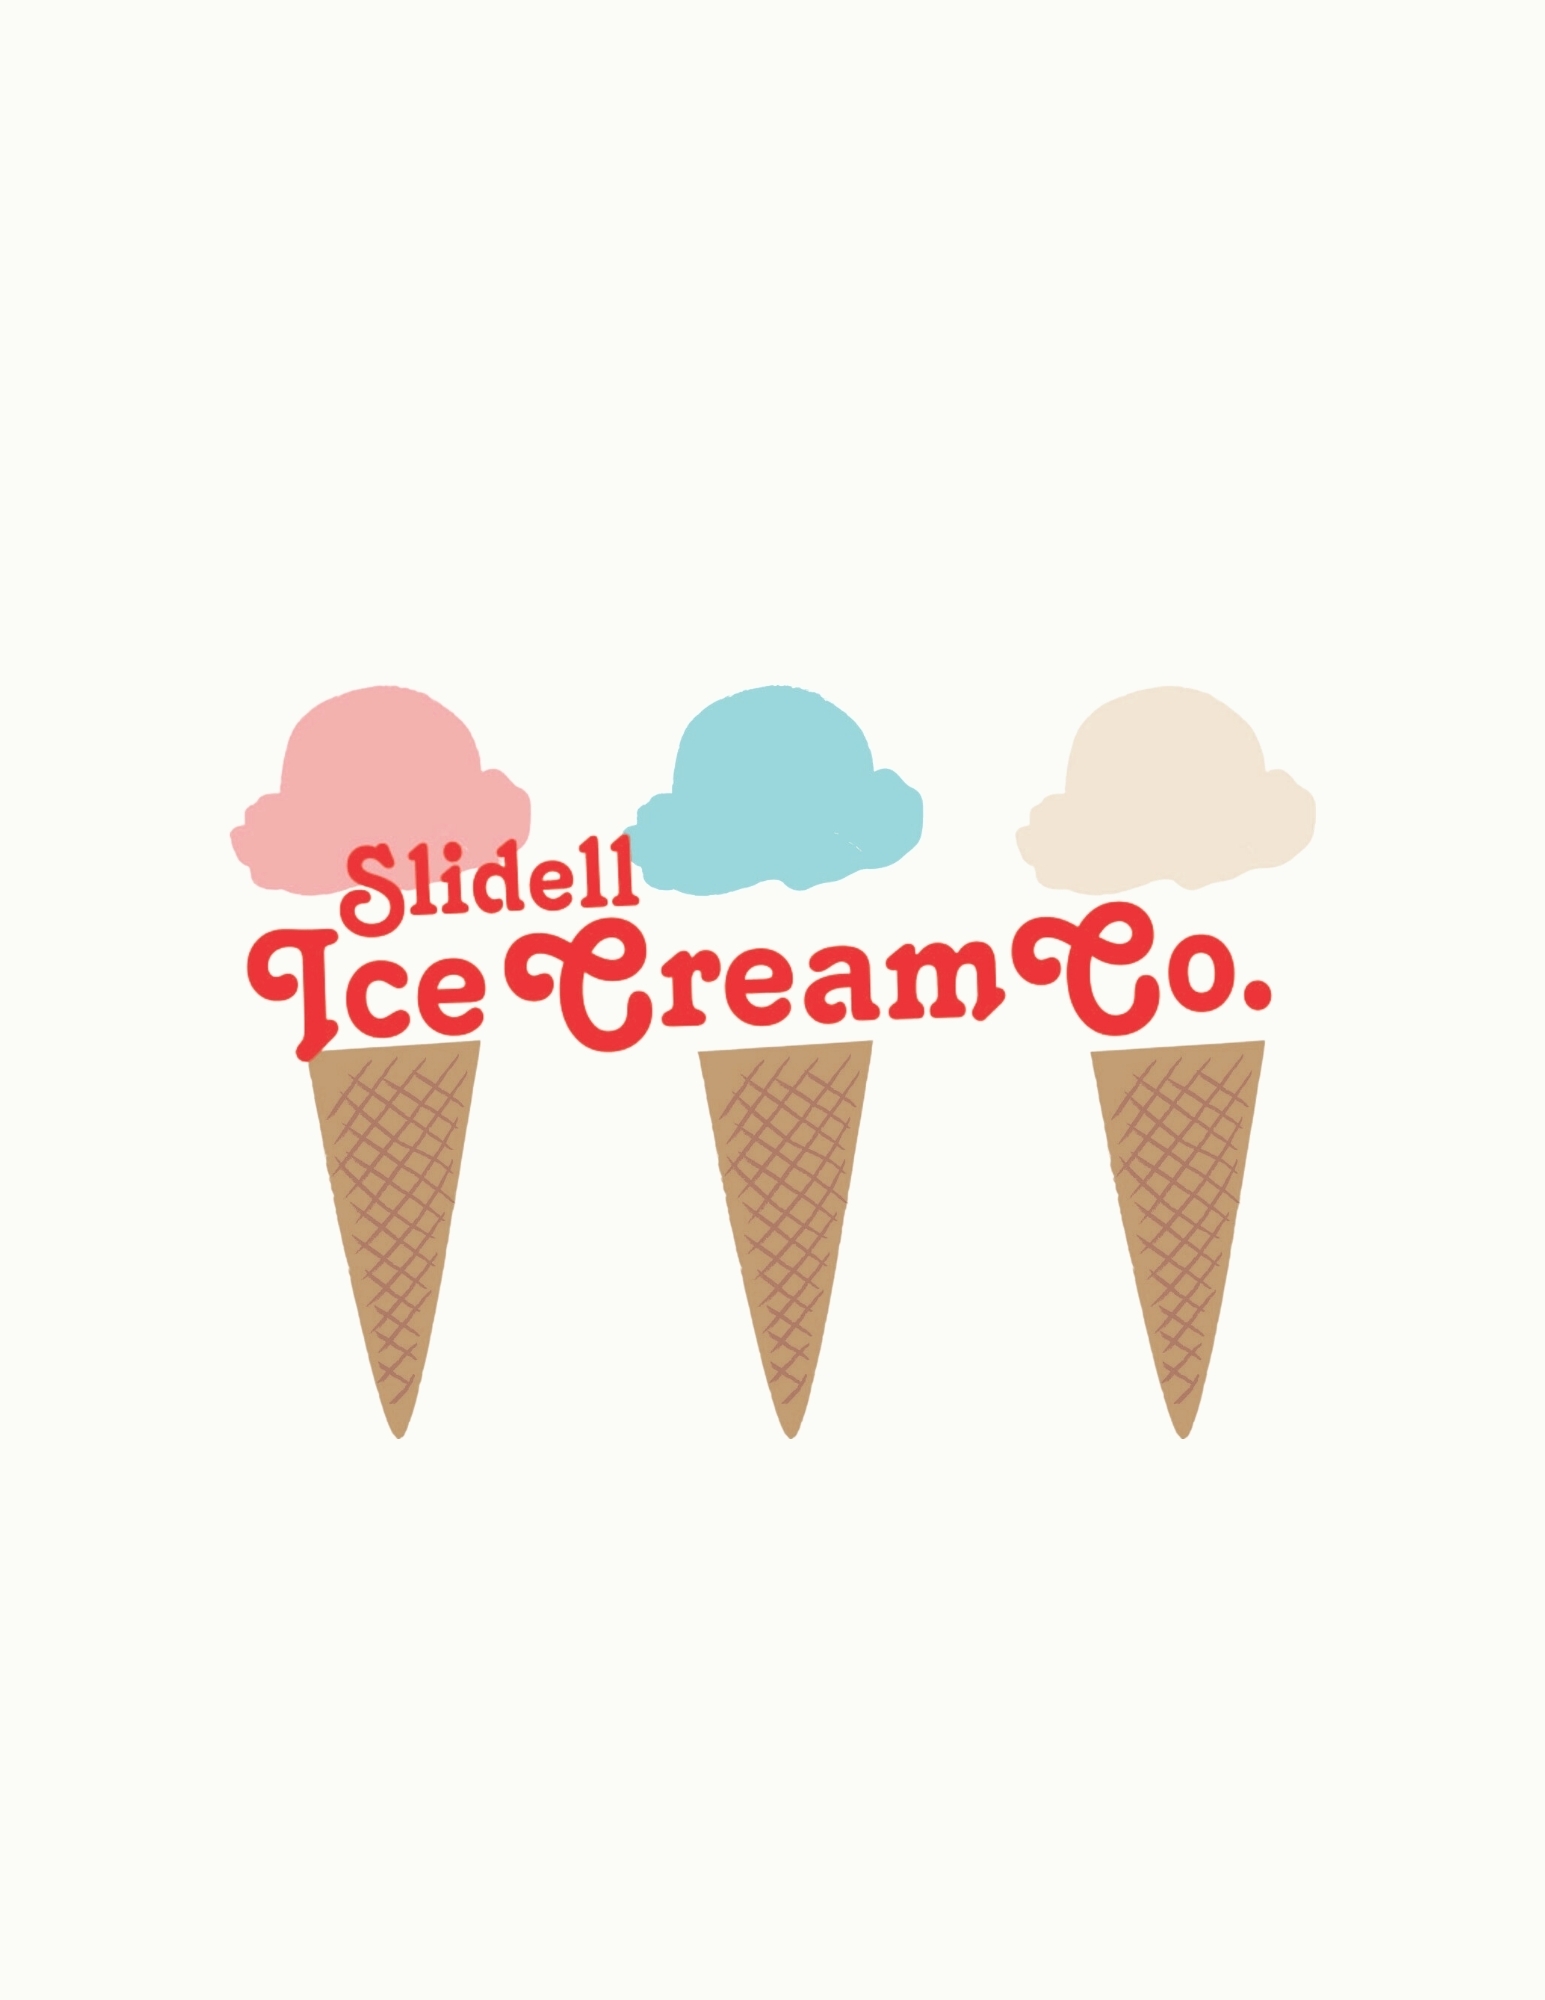 Slidell Ice Cream Co.